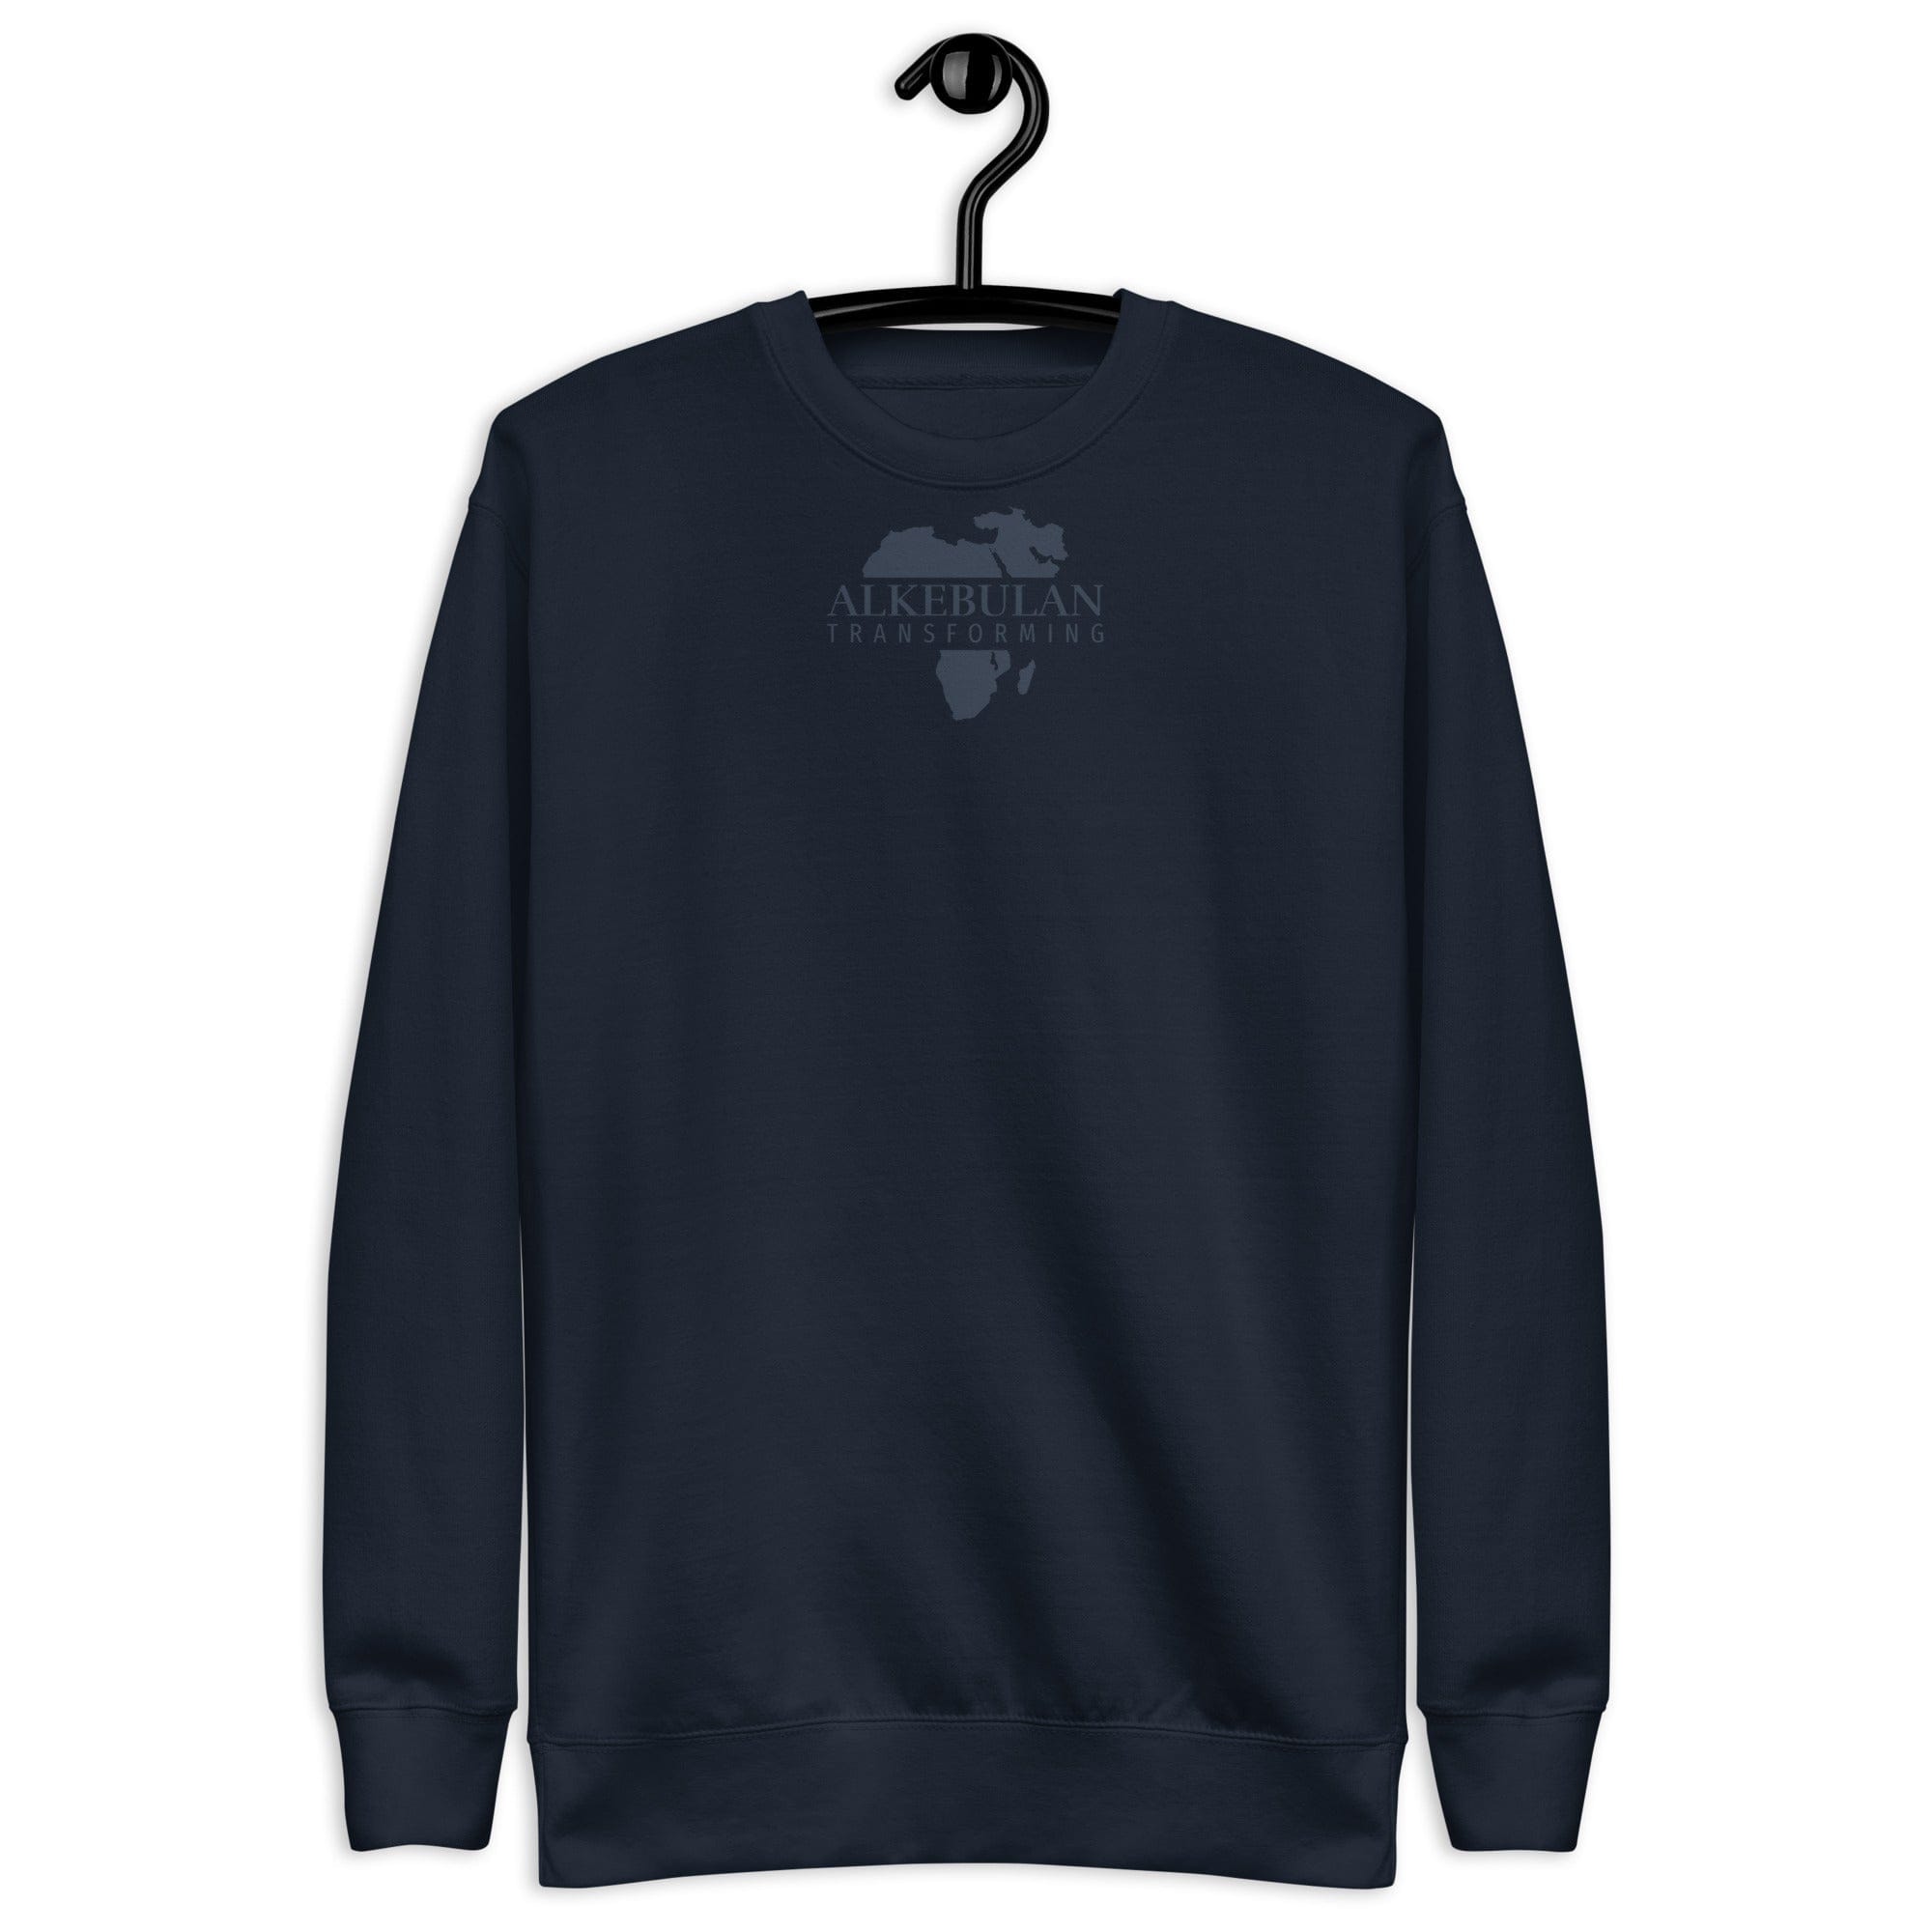 HCWP Design Premium Sweatshirt - HCWP 